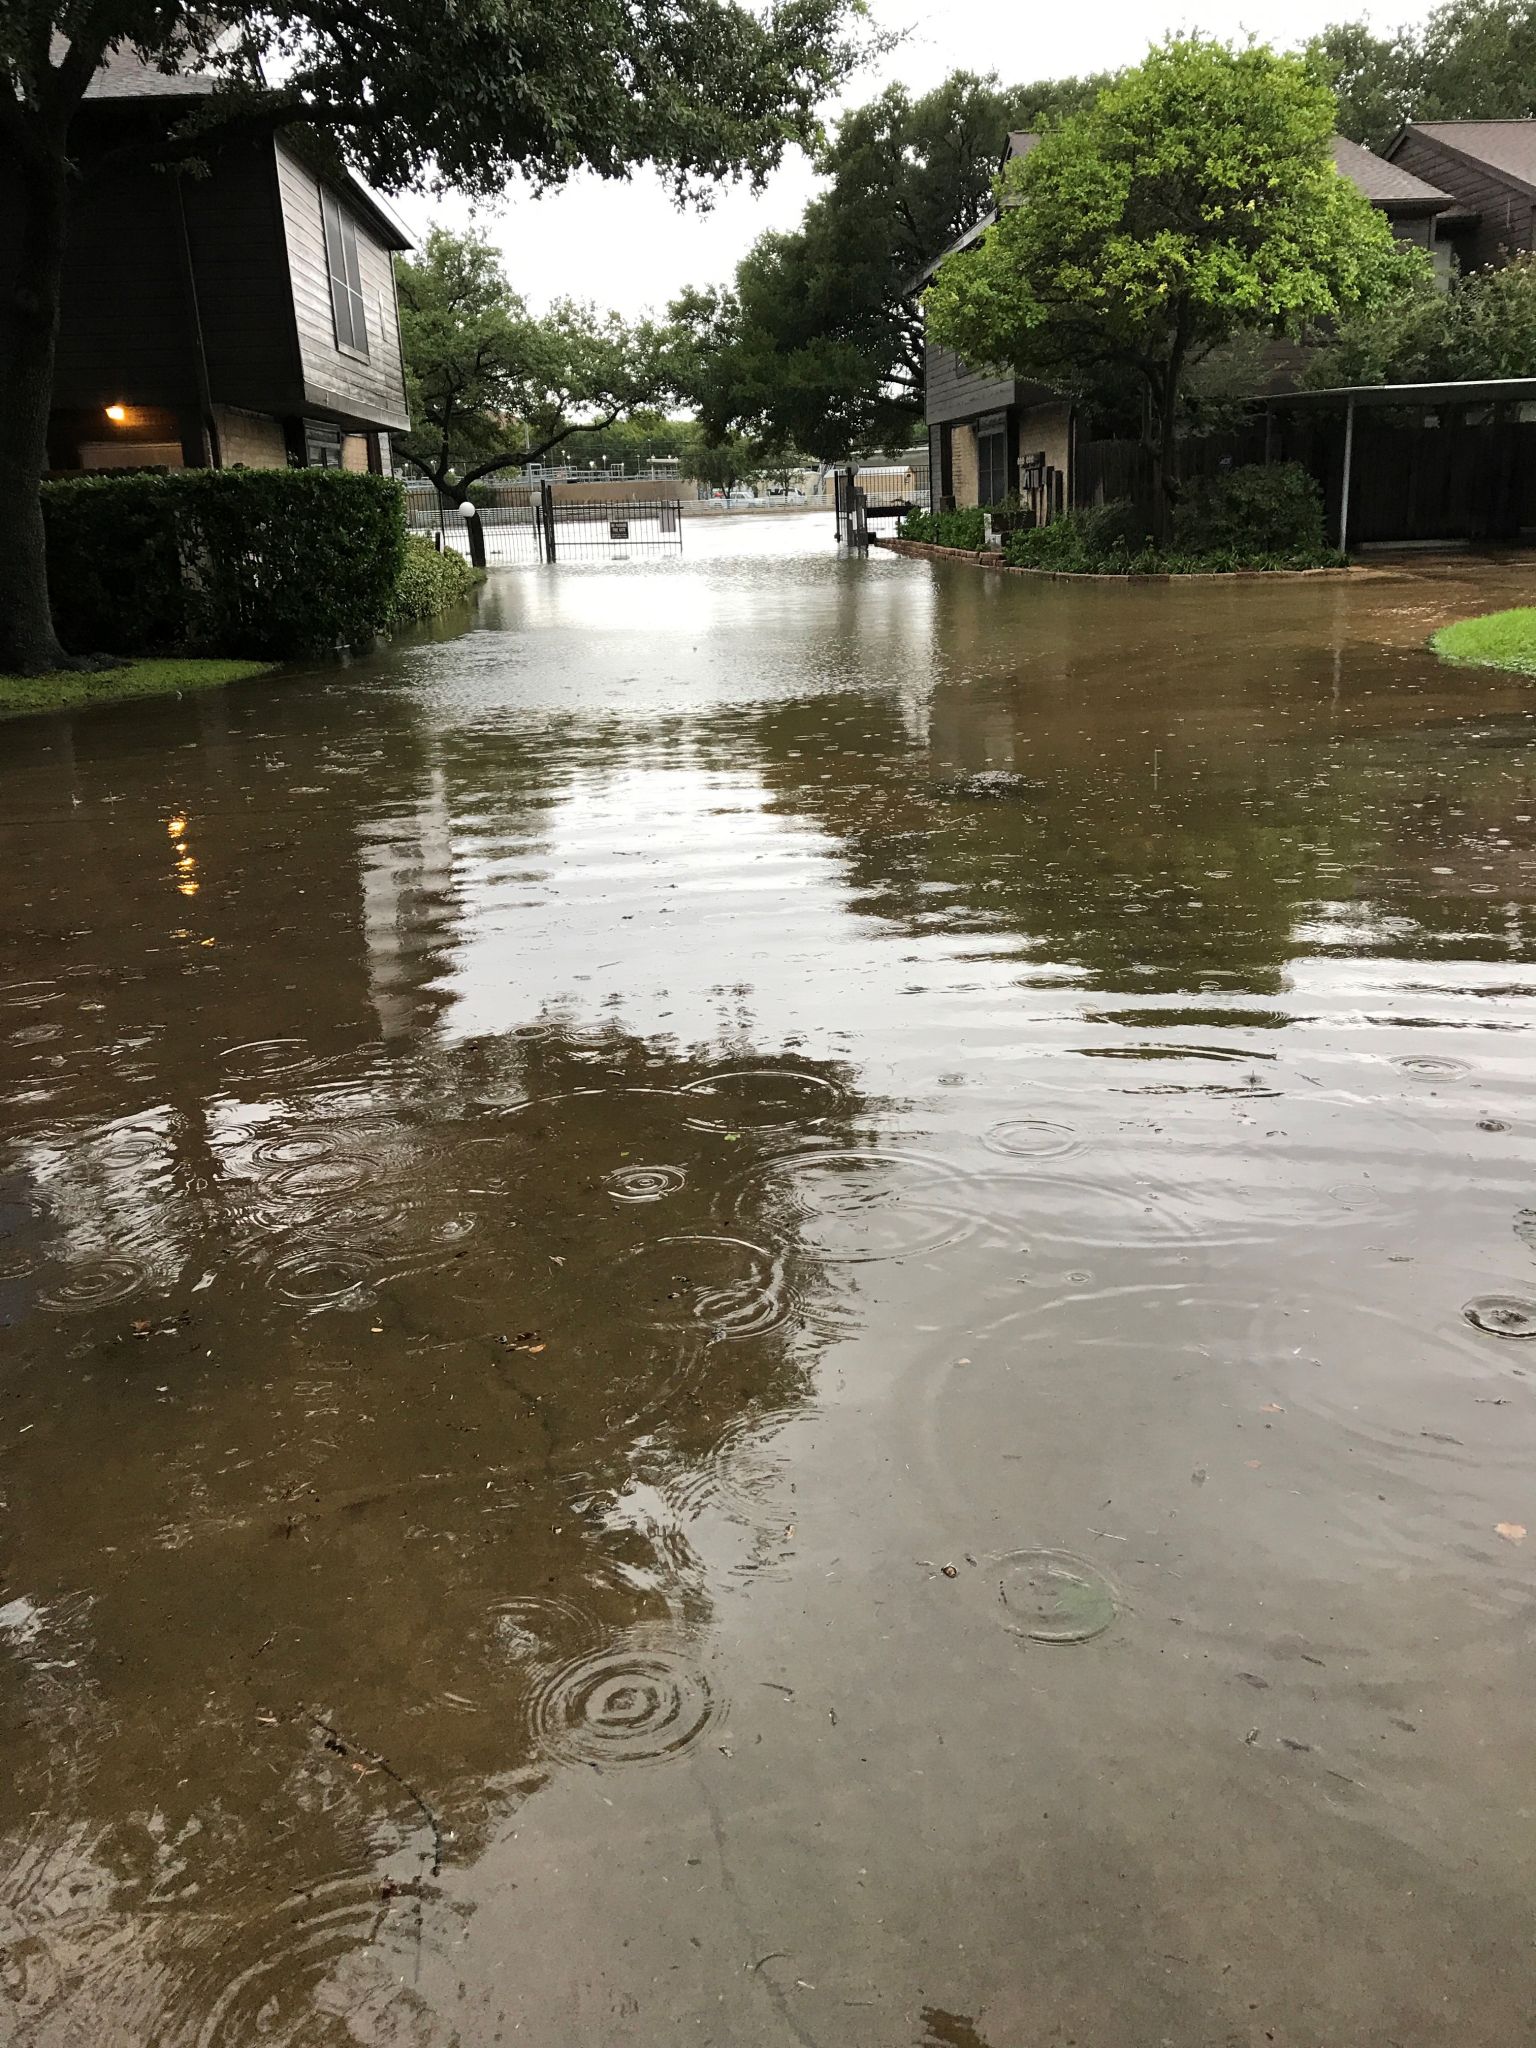 Harvey's floods will sink Houston home values - Houston Chronicle